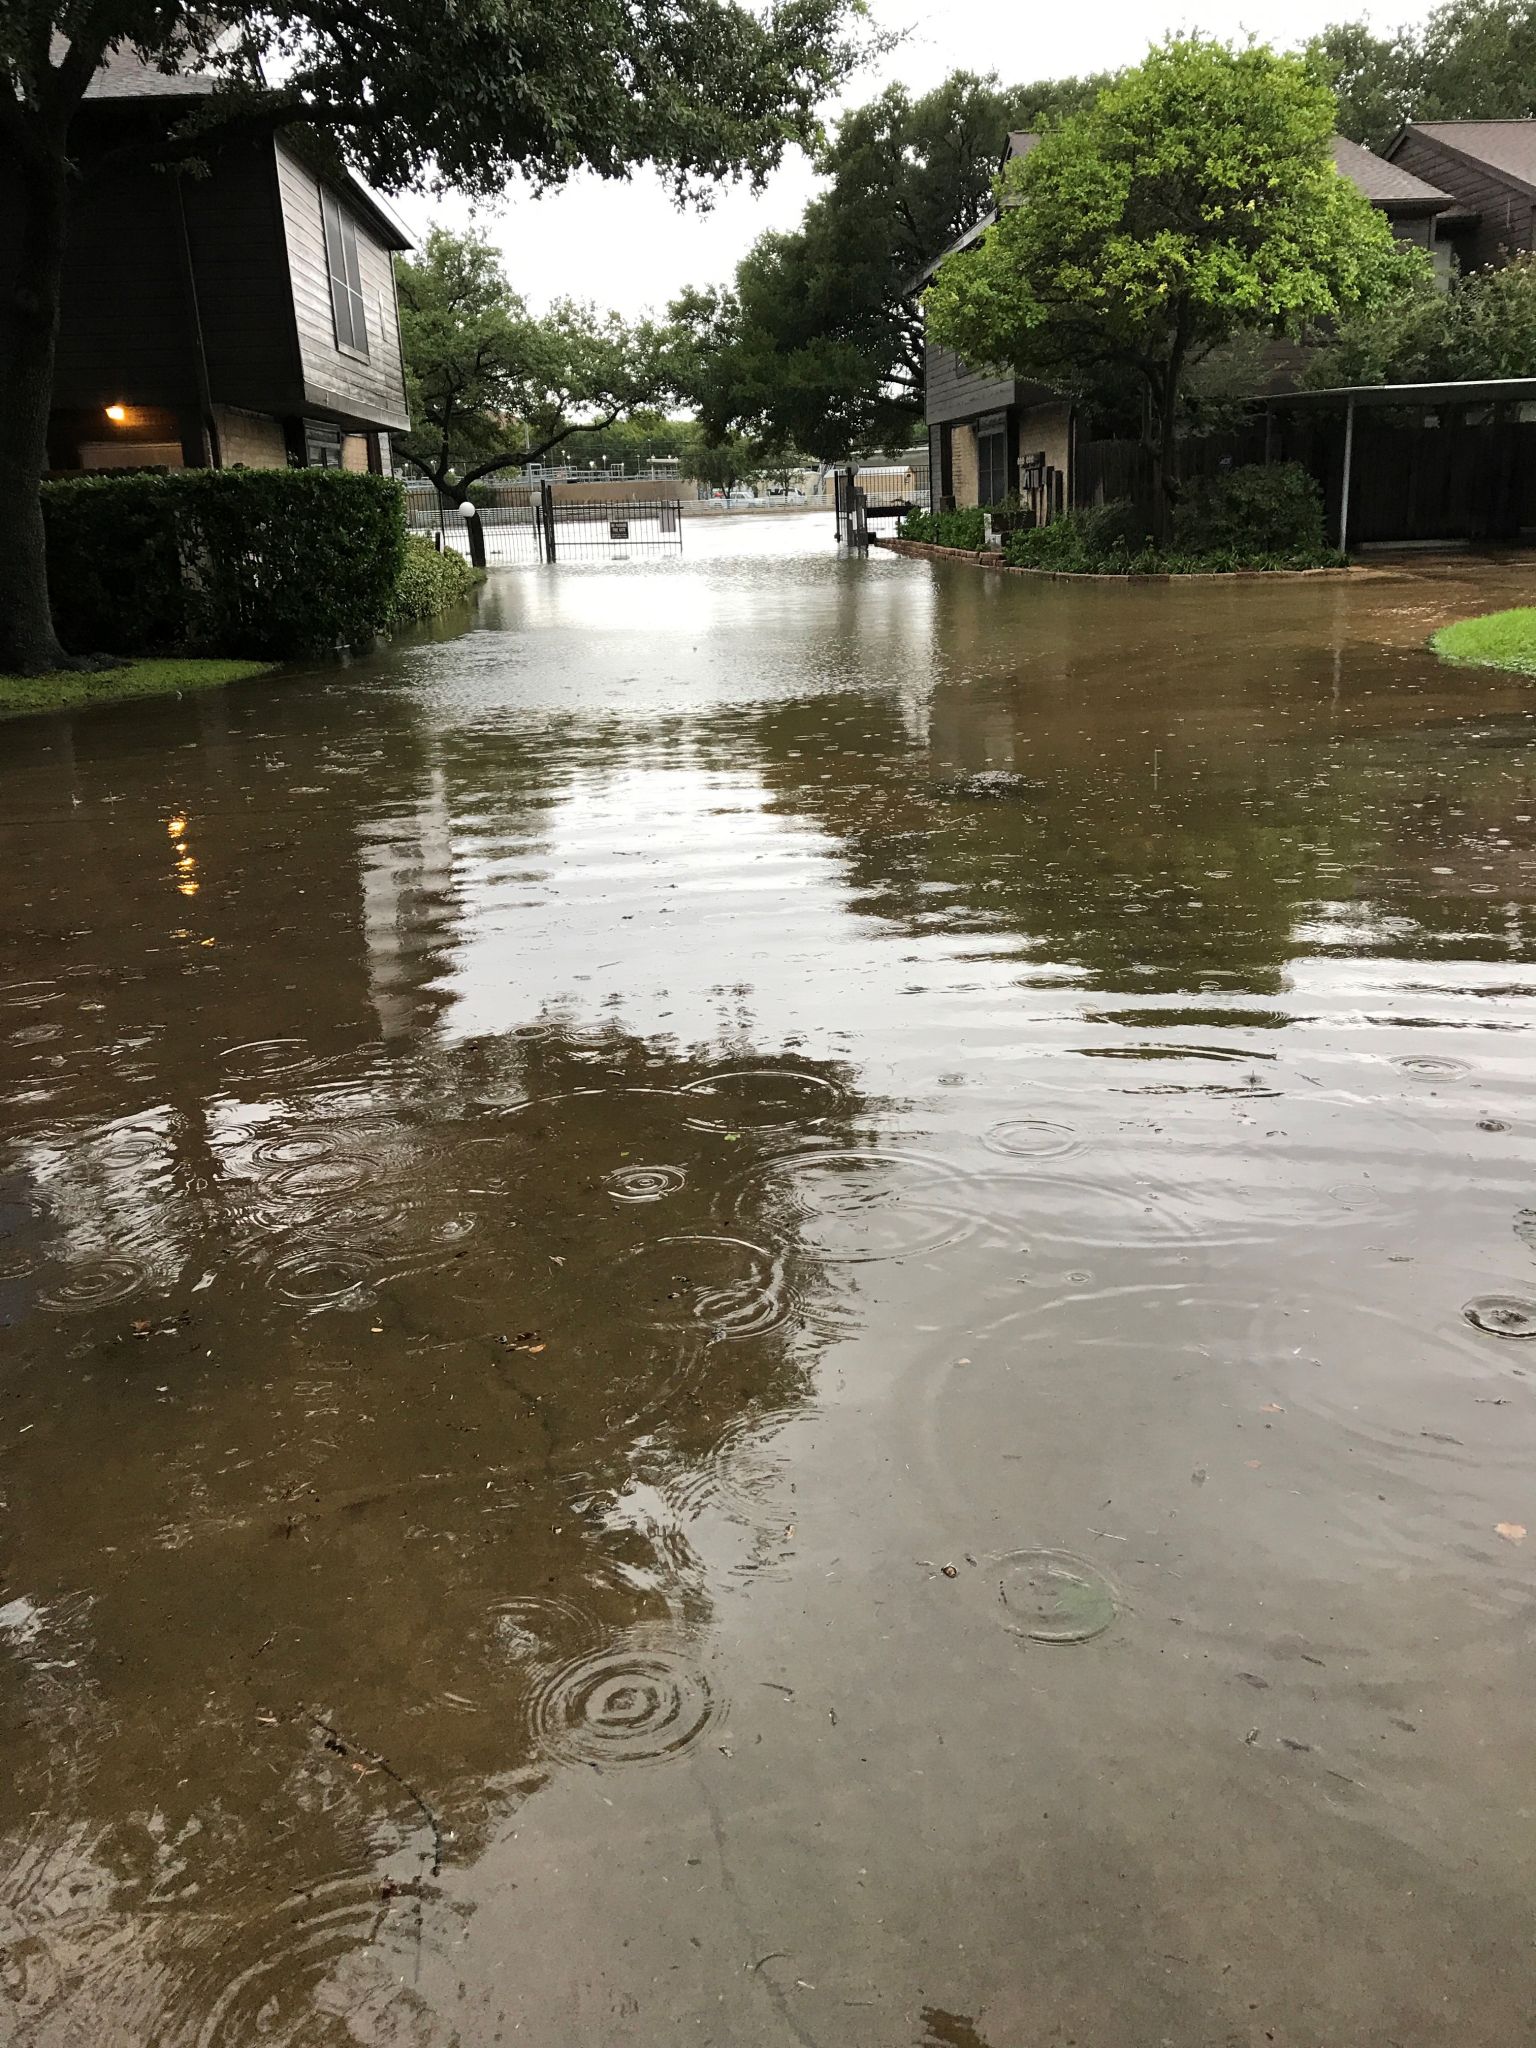 Harvey's floods will sink Houston home values - Houston Chronicle